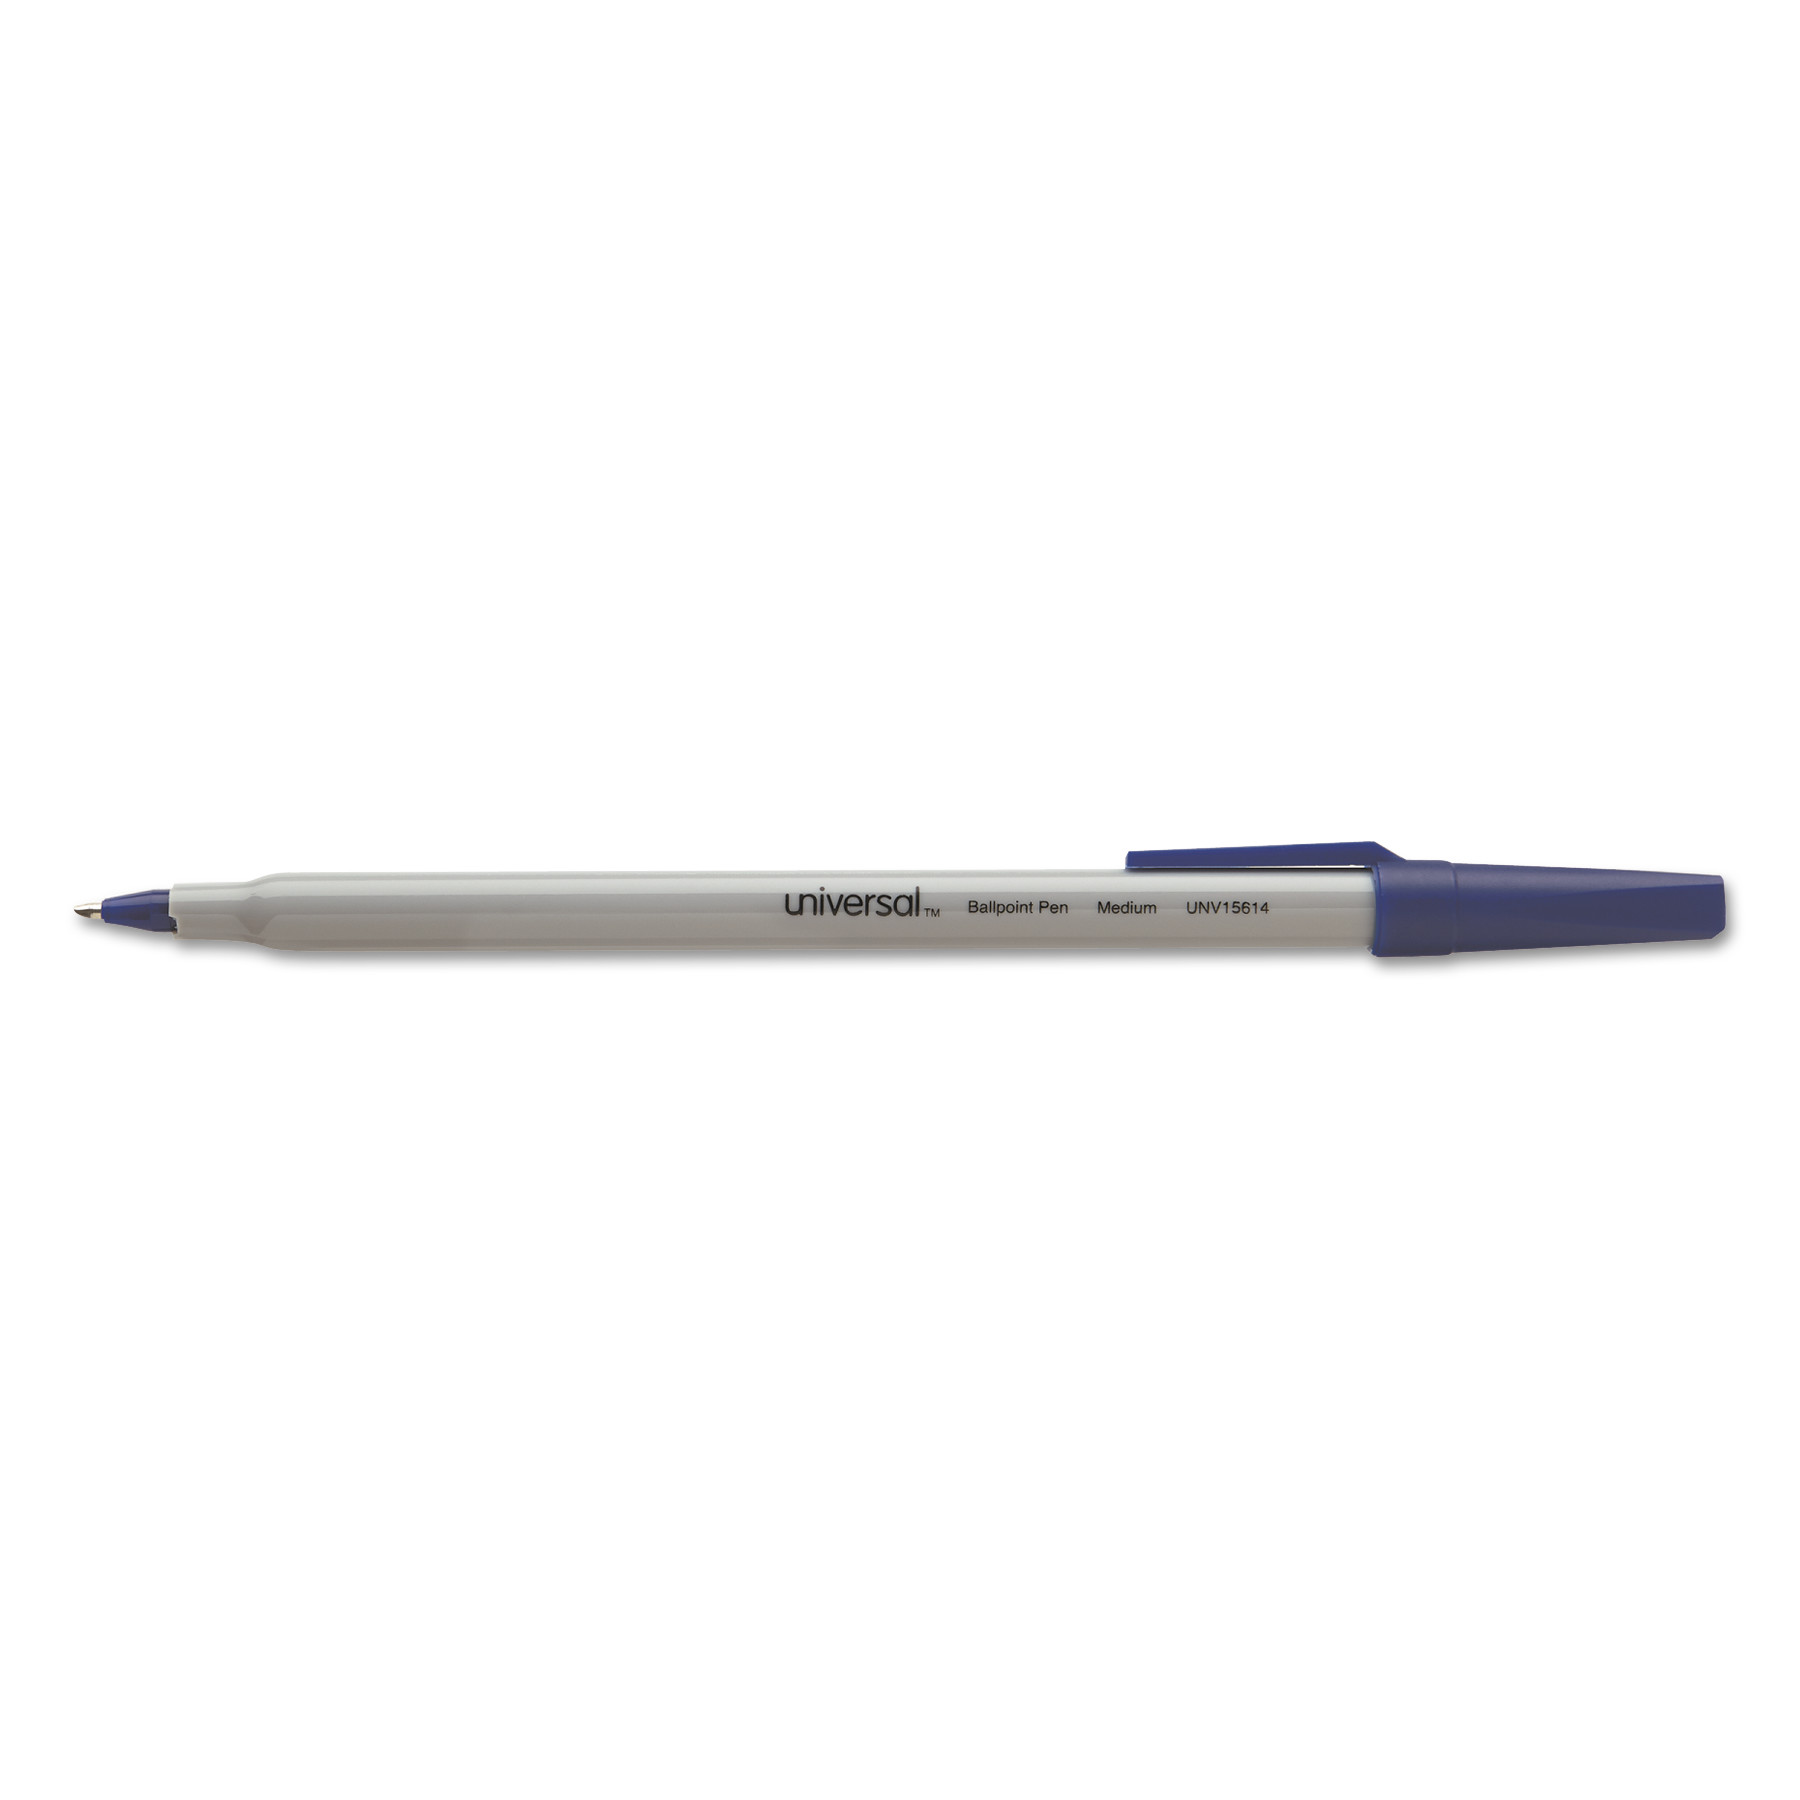  Universal UNV15614 Stick Ballpoint Pen Value Pack, Medium 1mm, Blue Ink, Gray Barrel, 60/Pack (UNV15614) 